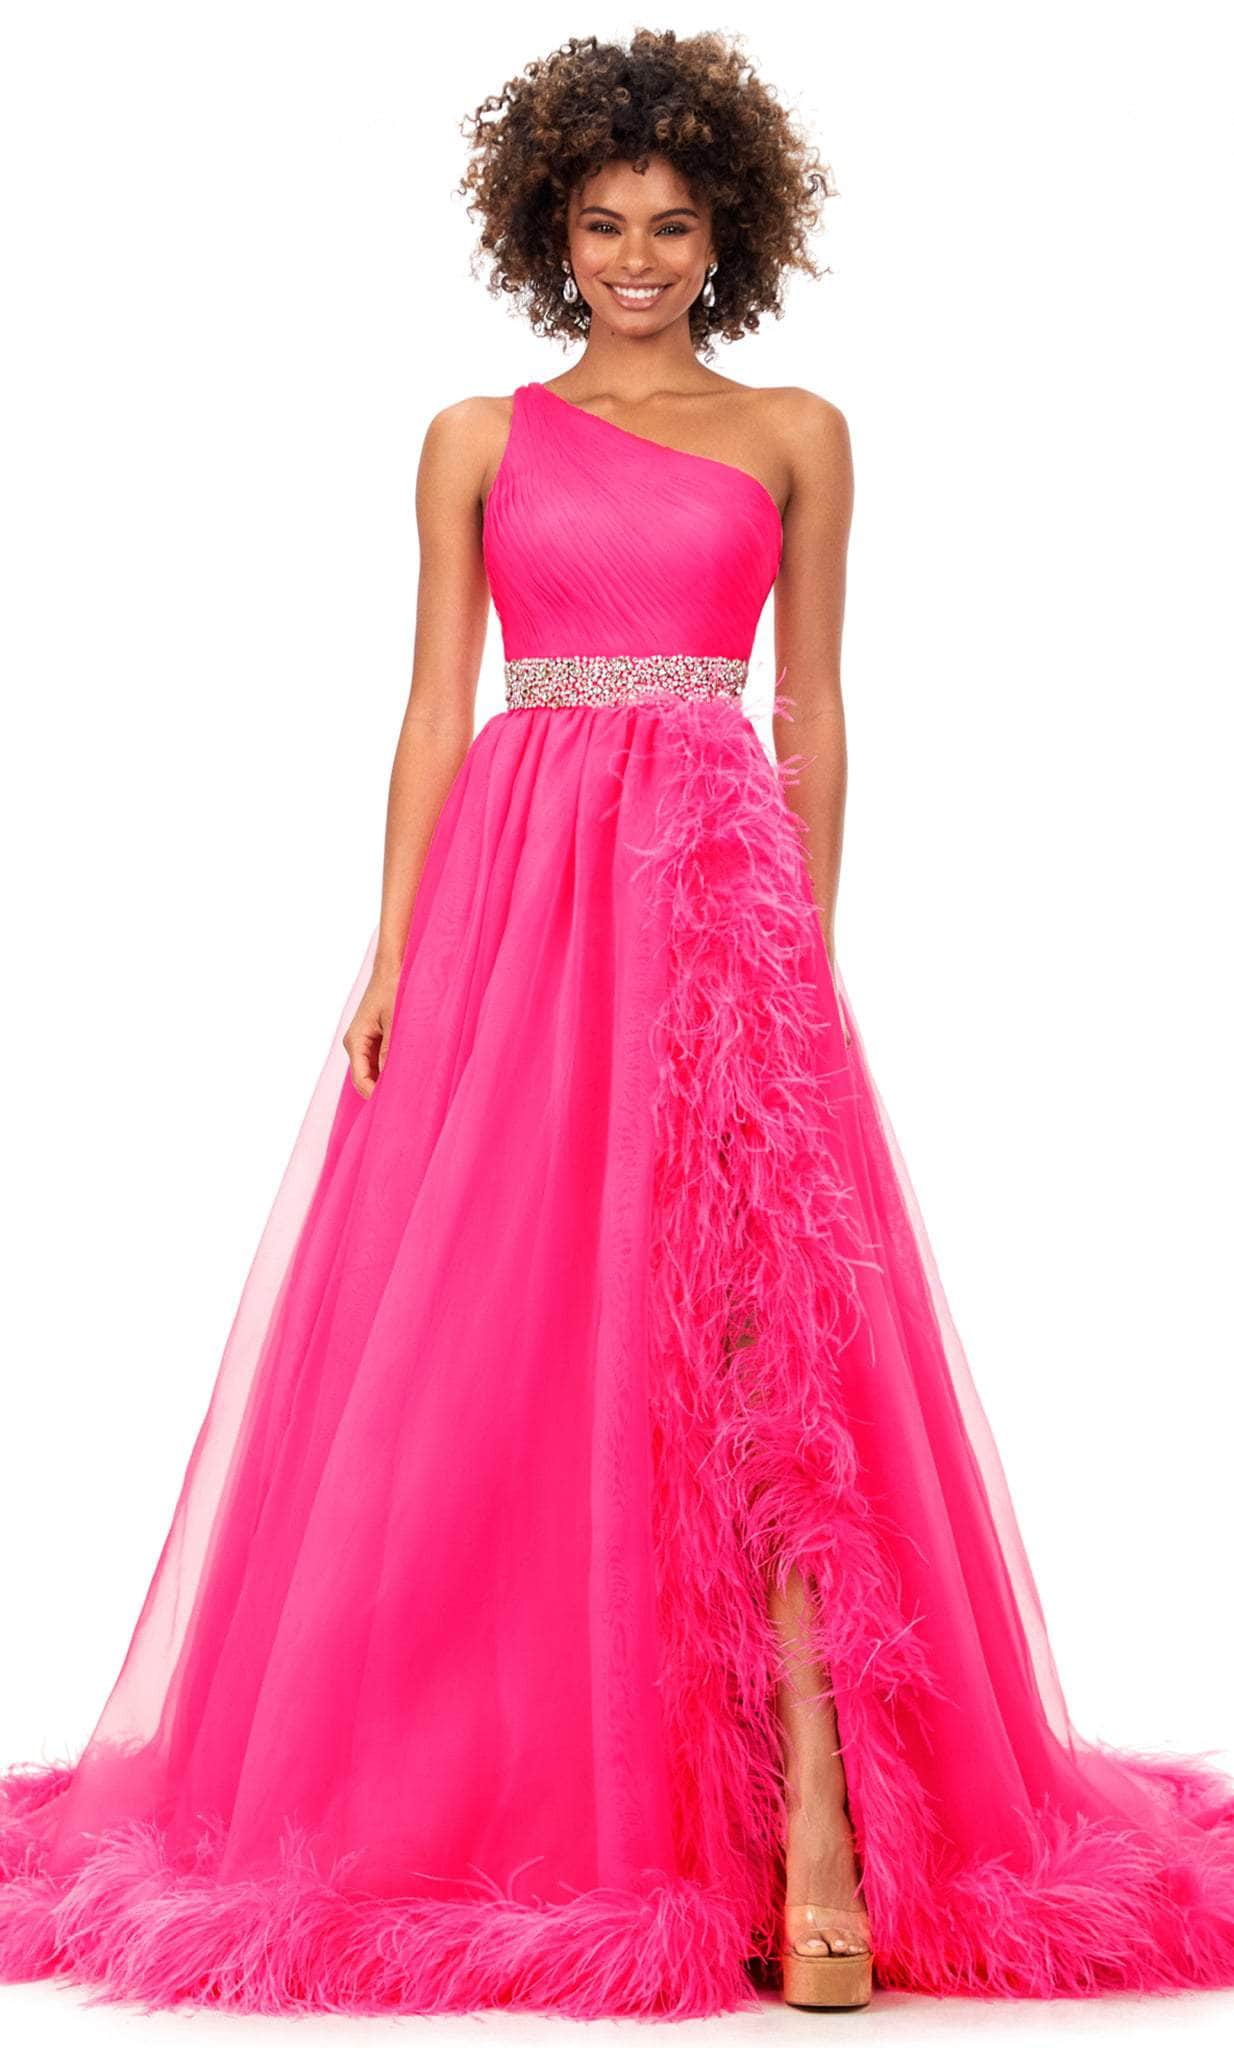 Ashley Lauren 11309 - Asymmetrical Appliqued Ballgown Special Occasion Dress 0 / Hot Pink